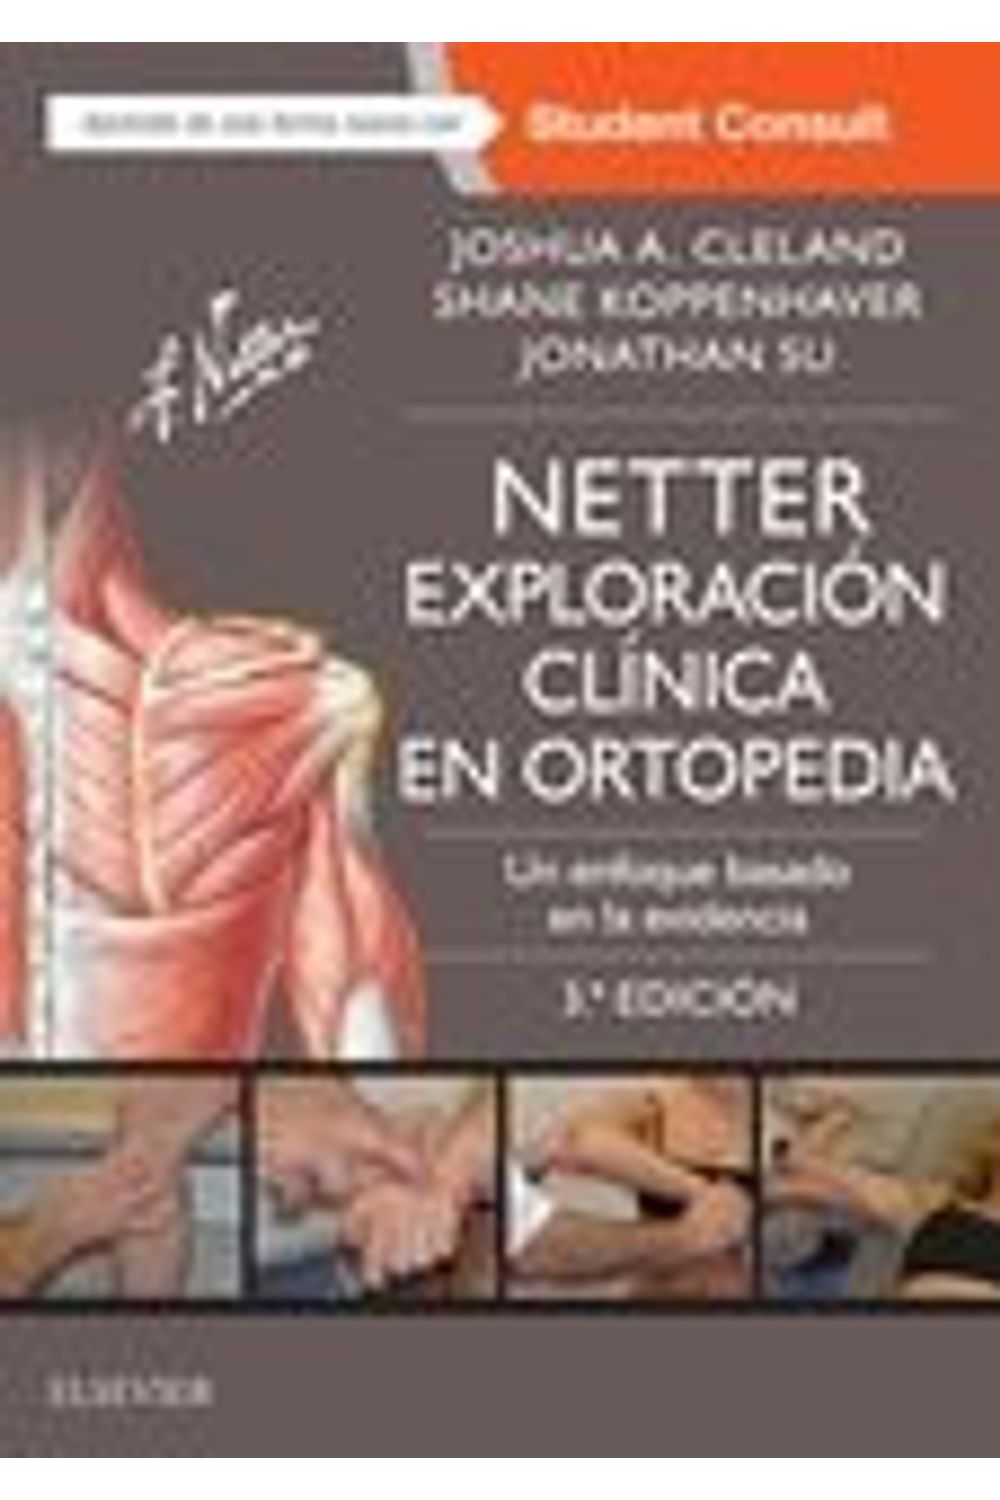 Netter. Exploracion Clinica En Ortopedia + Studentconsult 3